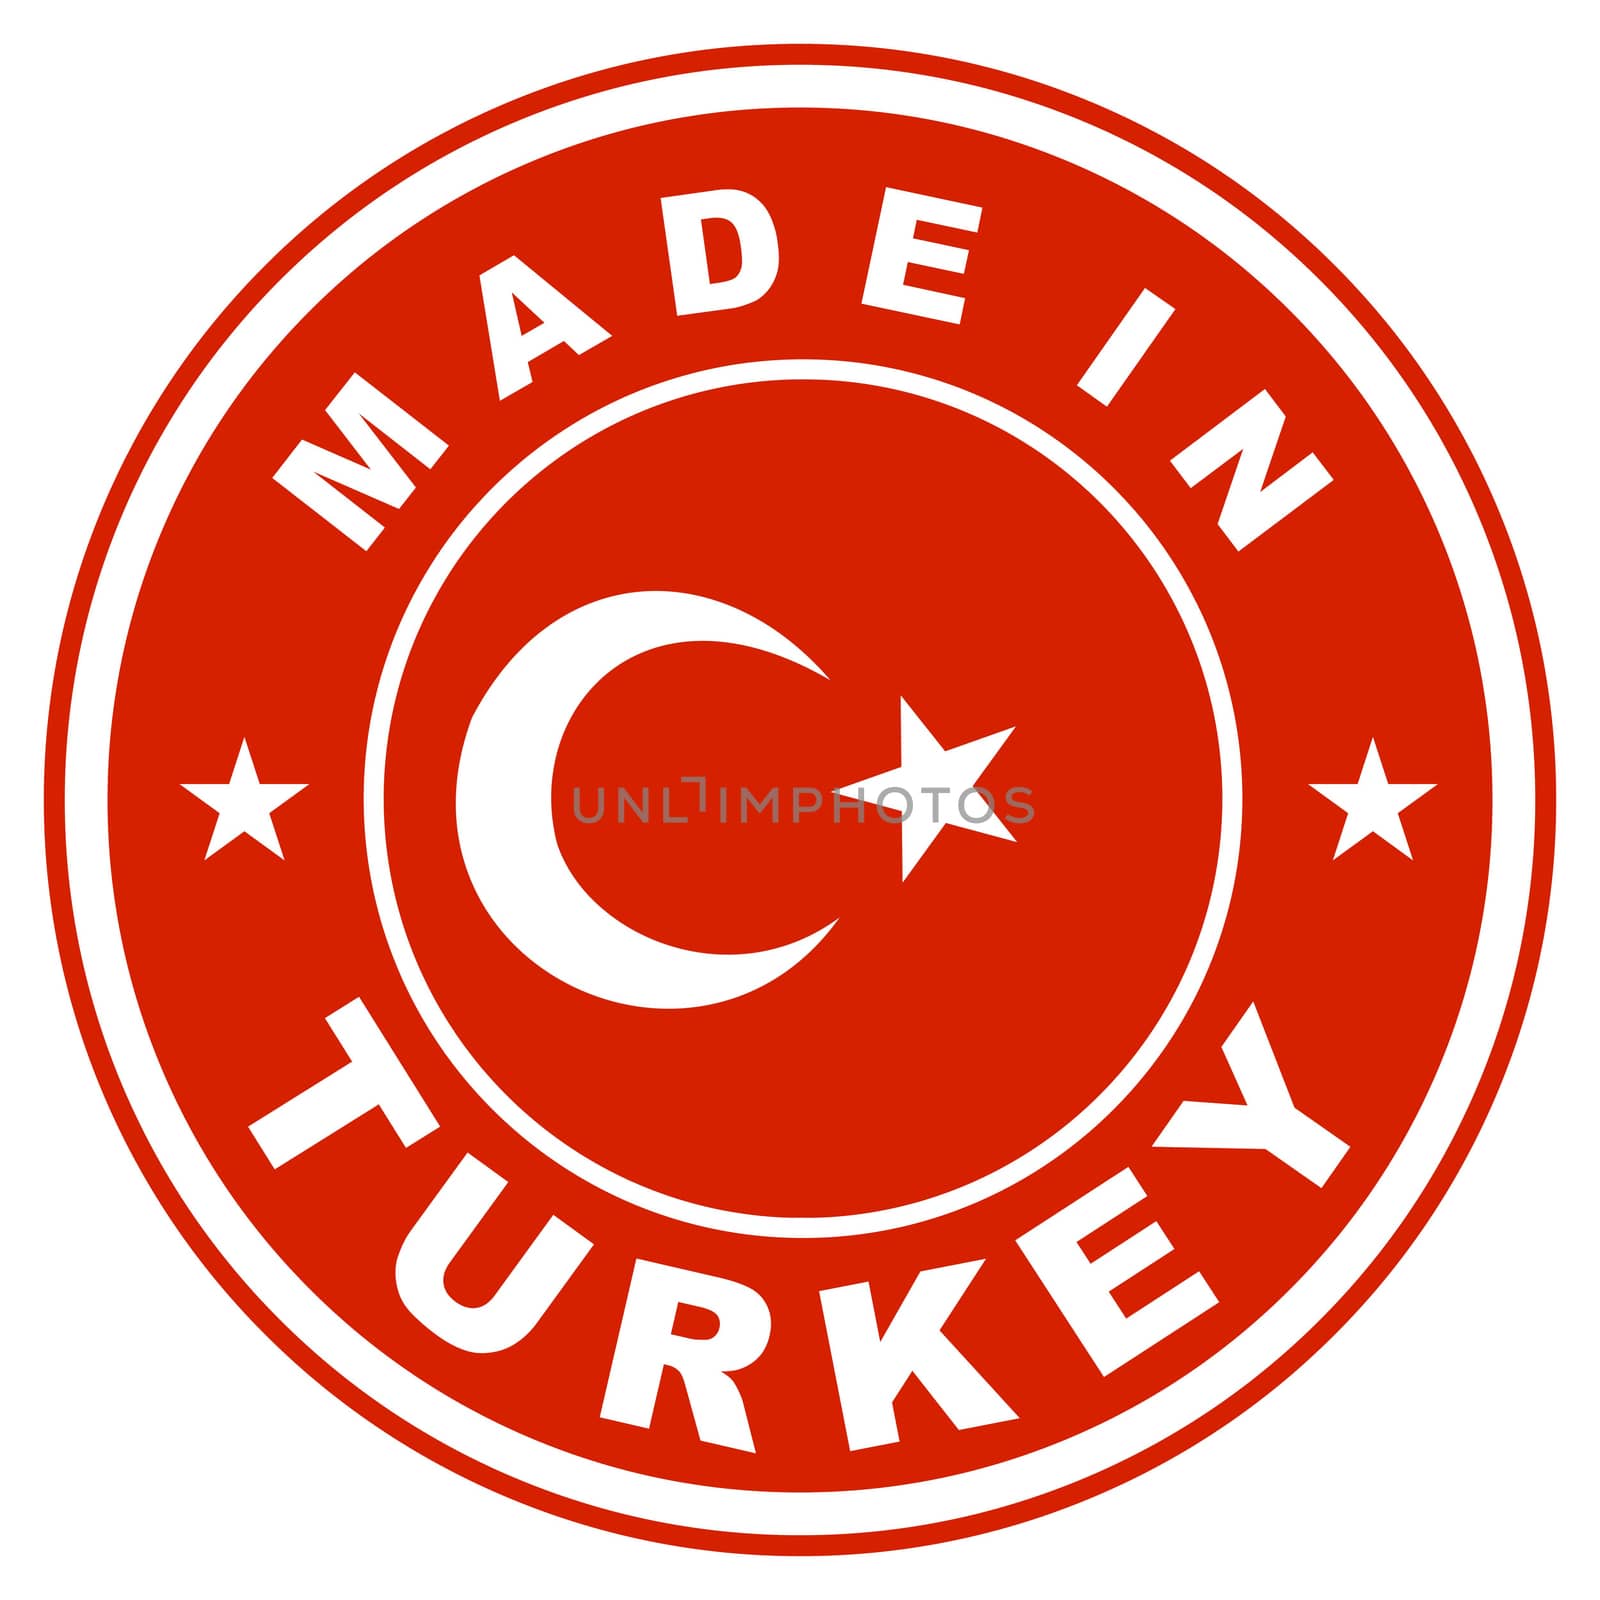 very big size made in turkey label illustratioan